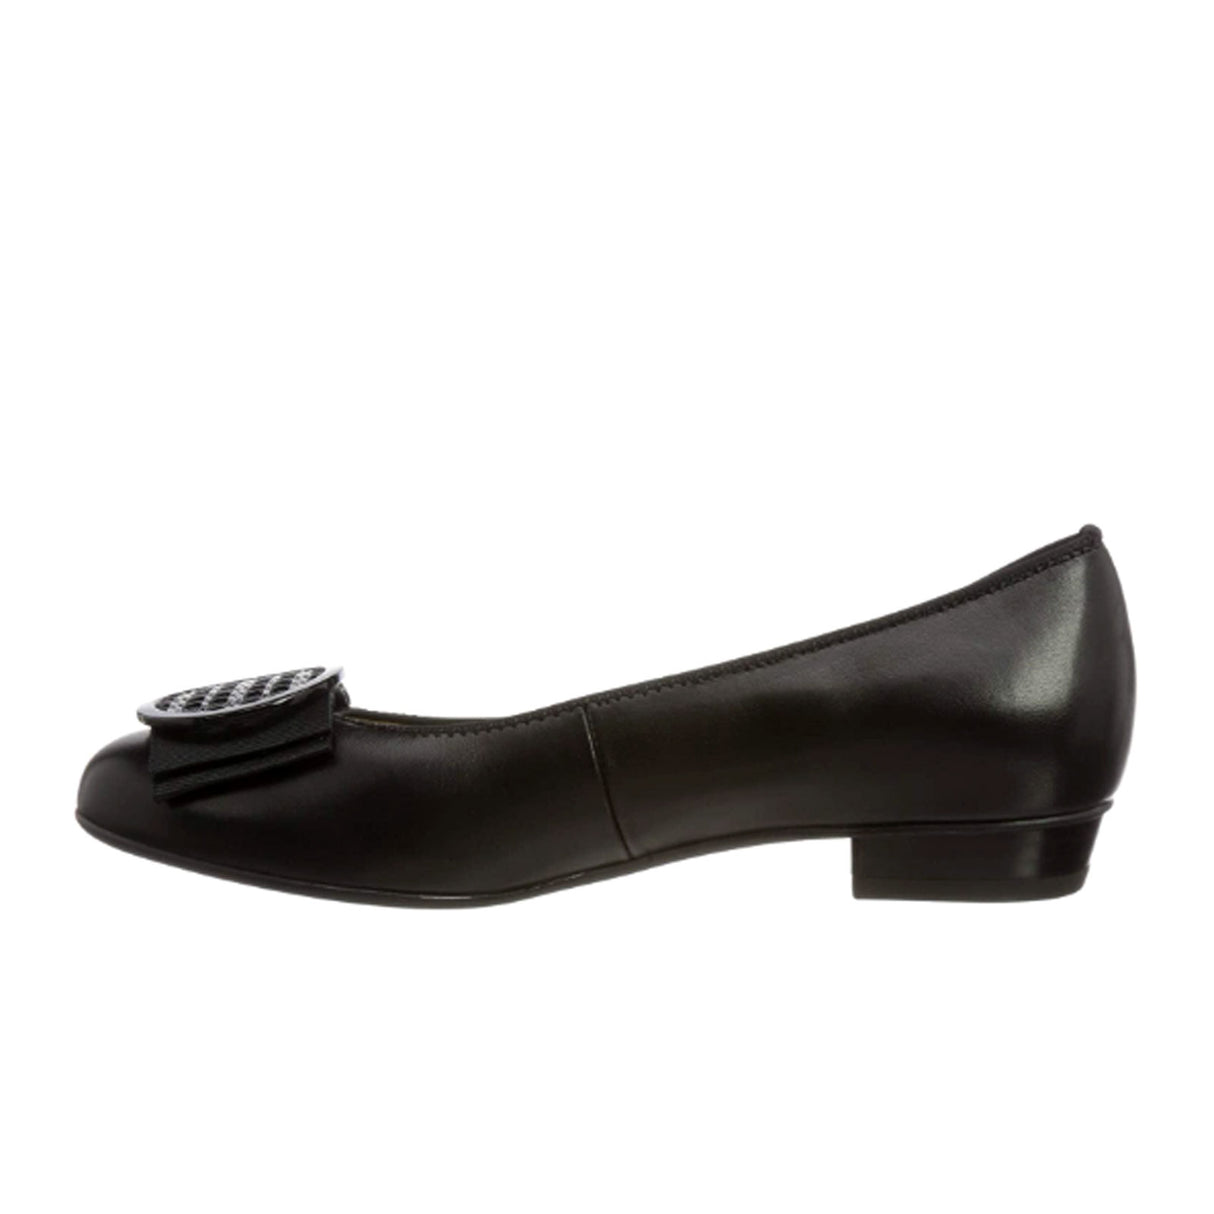 Ara Bambi Pump (Women) - Black Nappa Leather Dress-Casual - Heels - The Heel Shoe Fitters